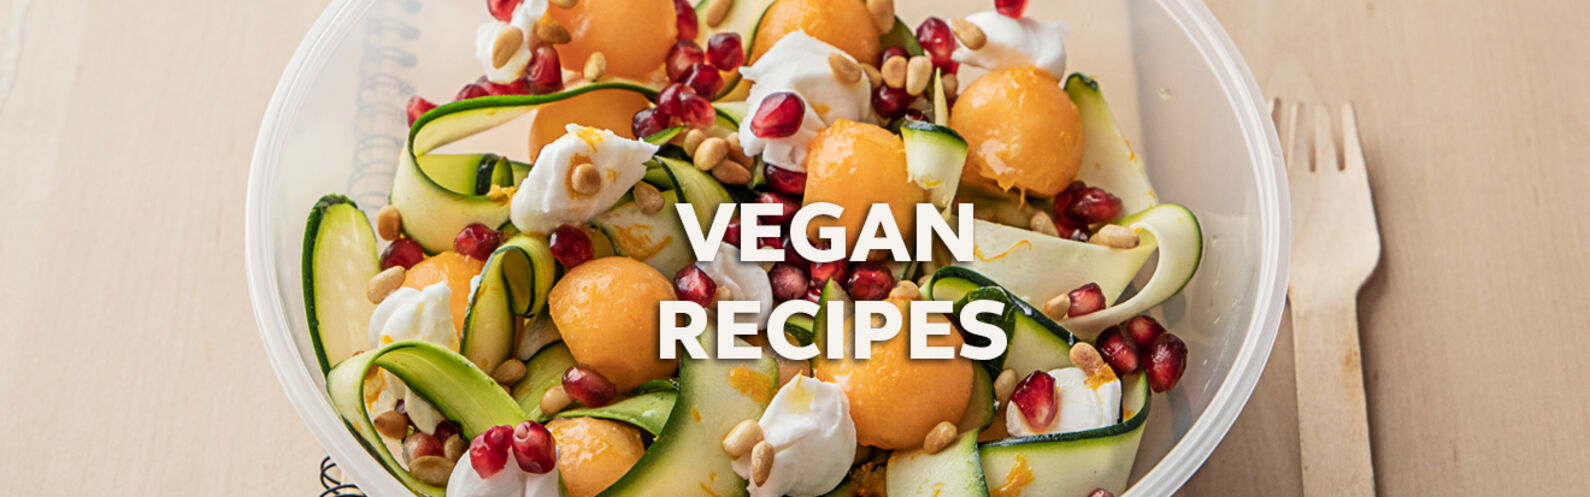 SuperValu Fruit and Veg Vegan Recipes